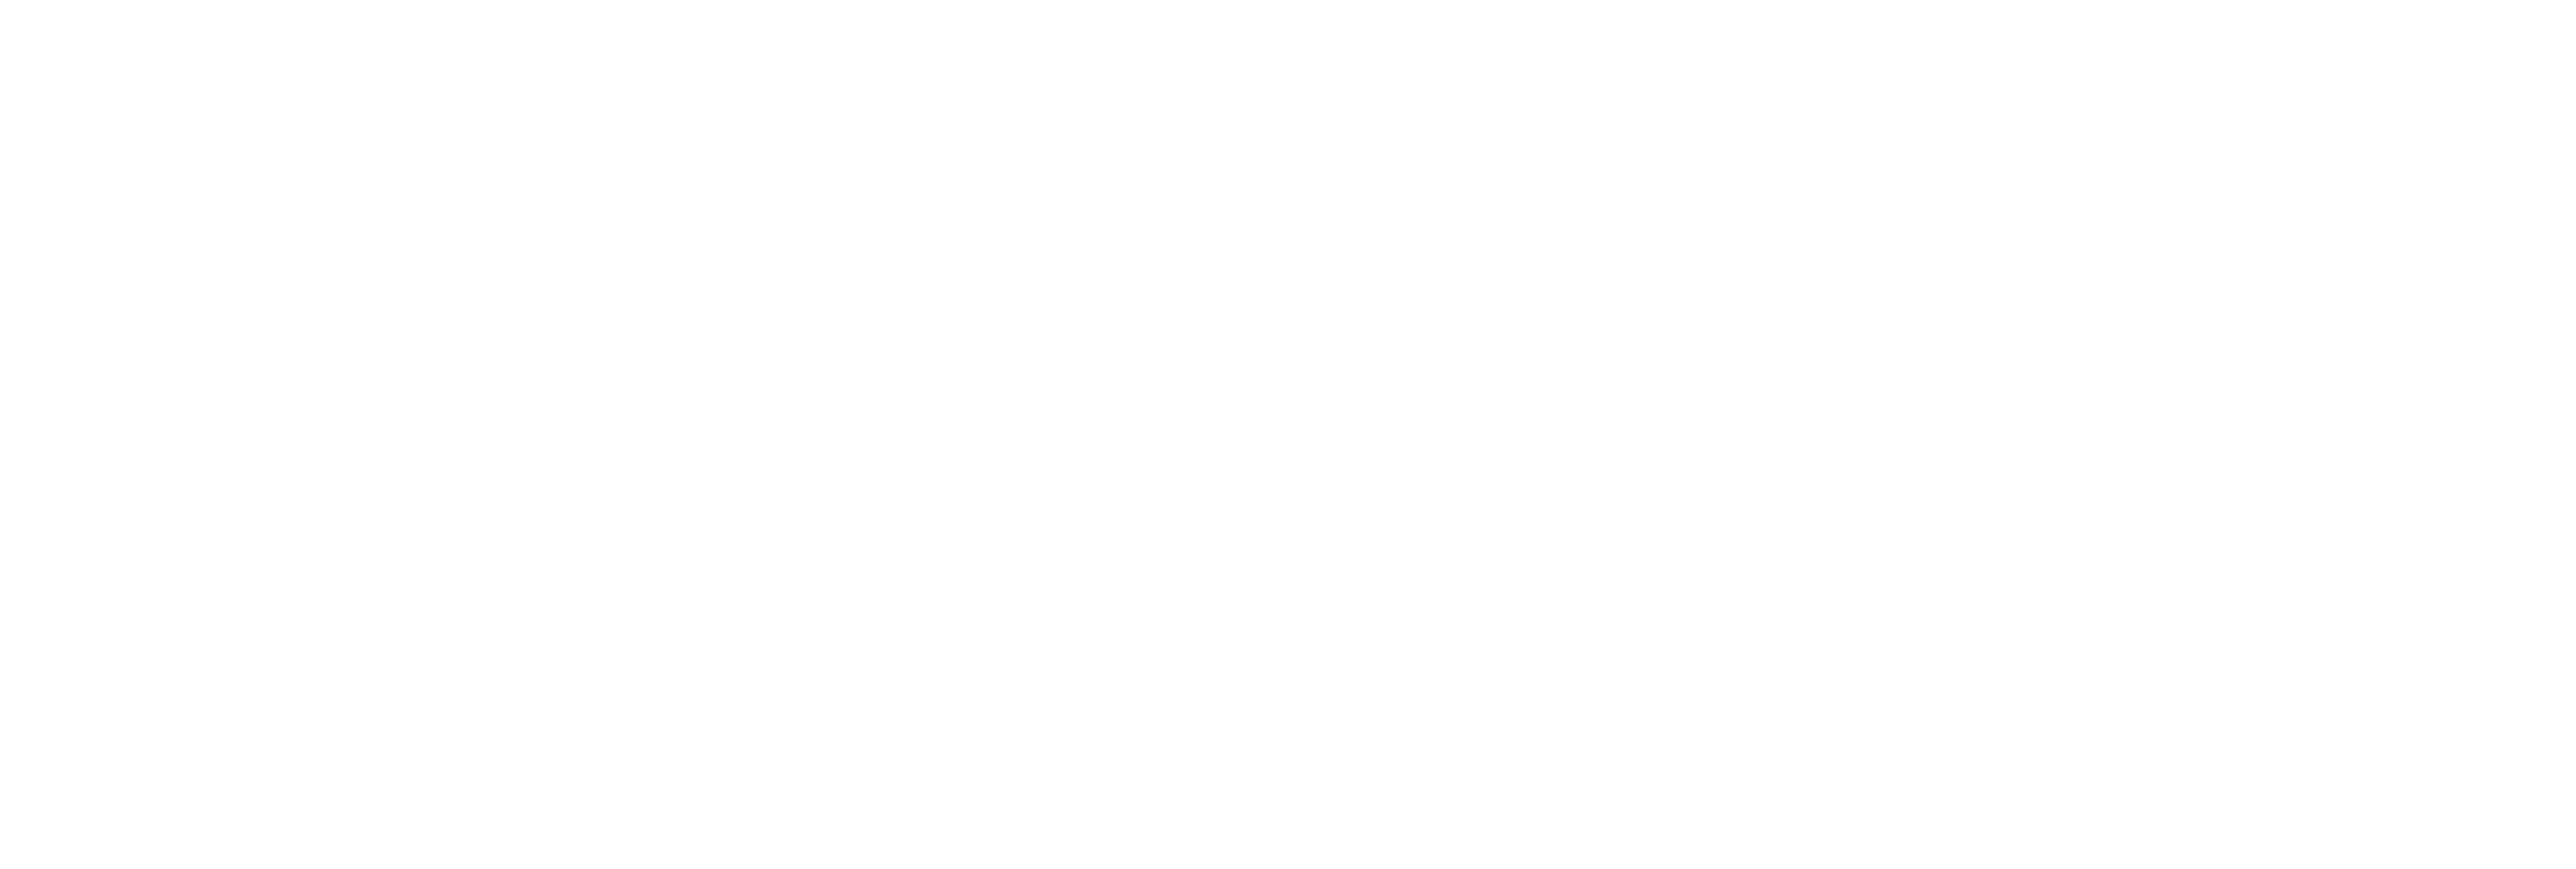 Star Trek: The Next Generation logo